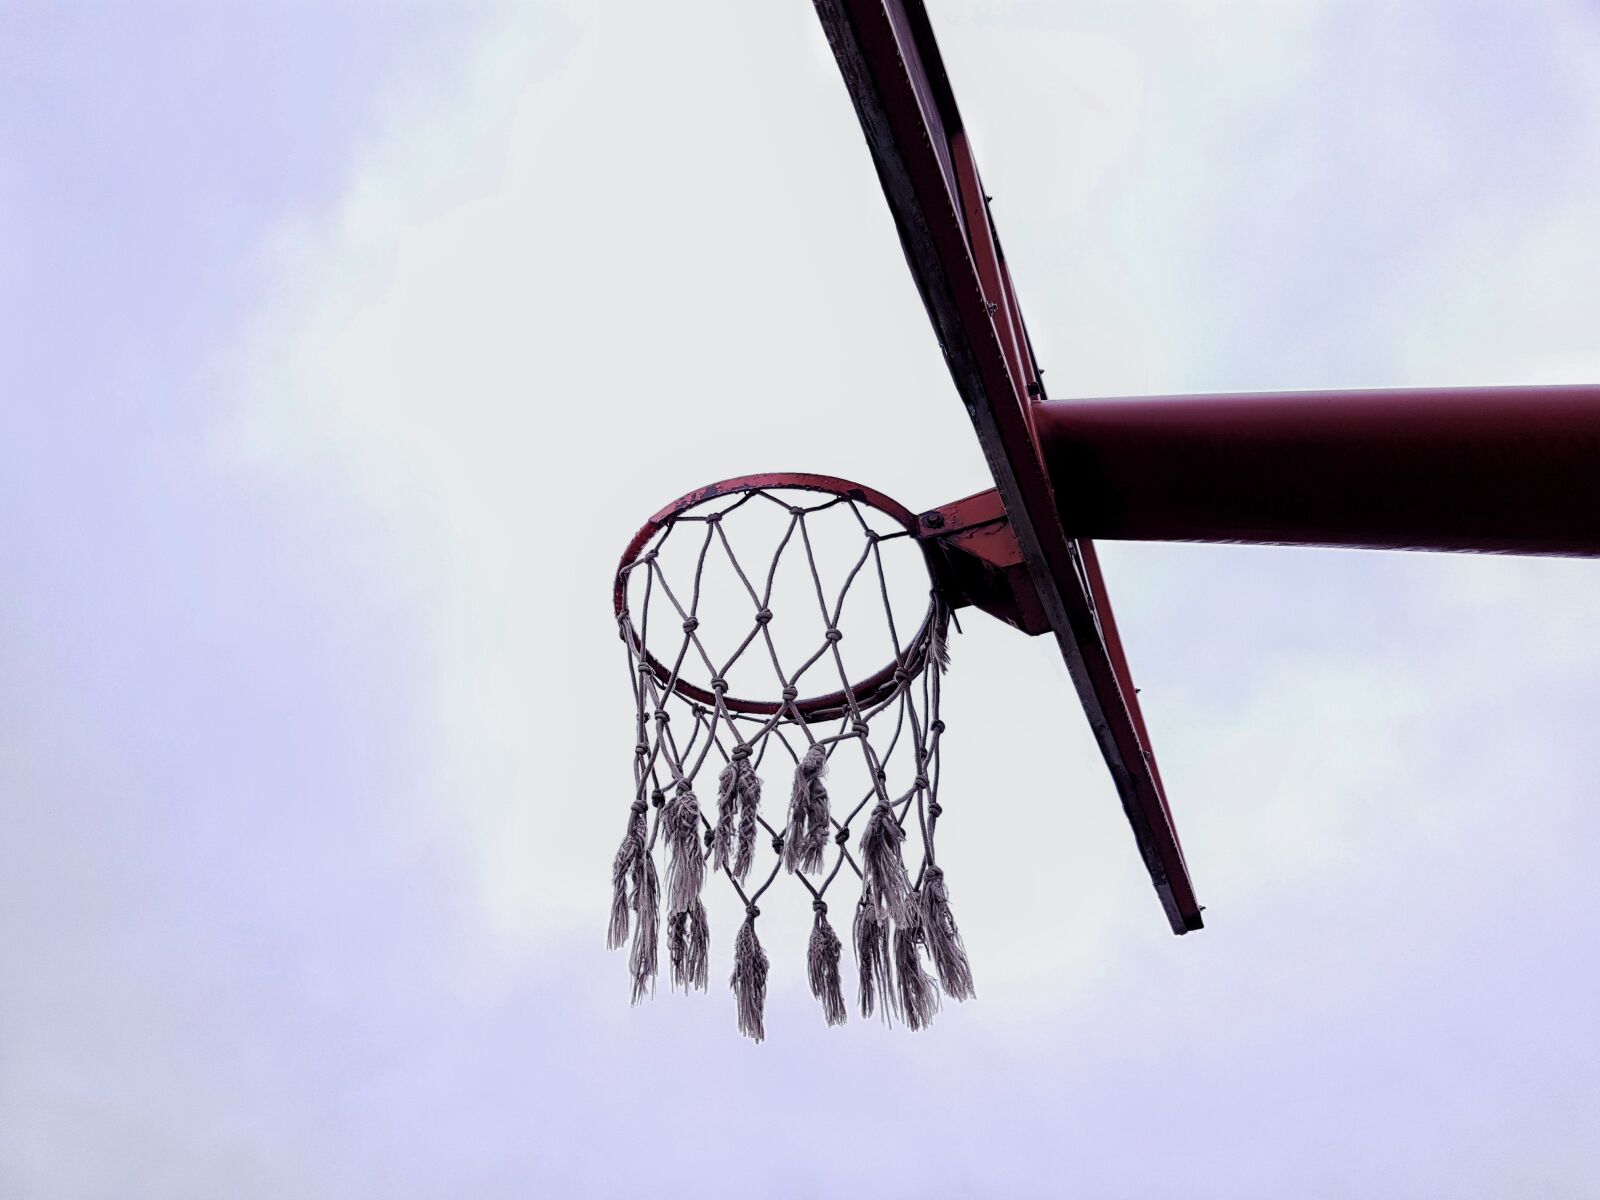 Samsung Galaxy S7 sample photo. Hoop, basketball, sport photography